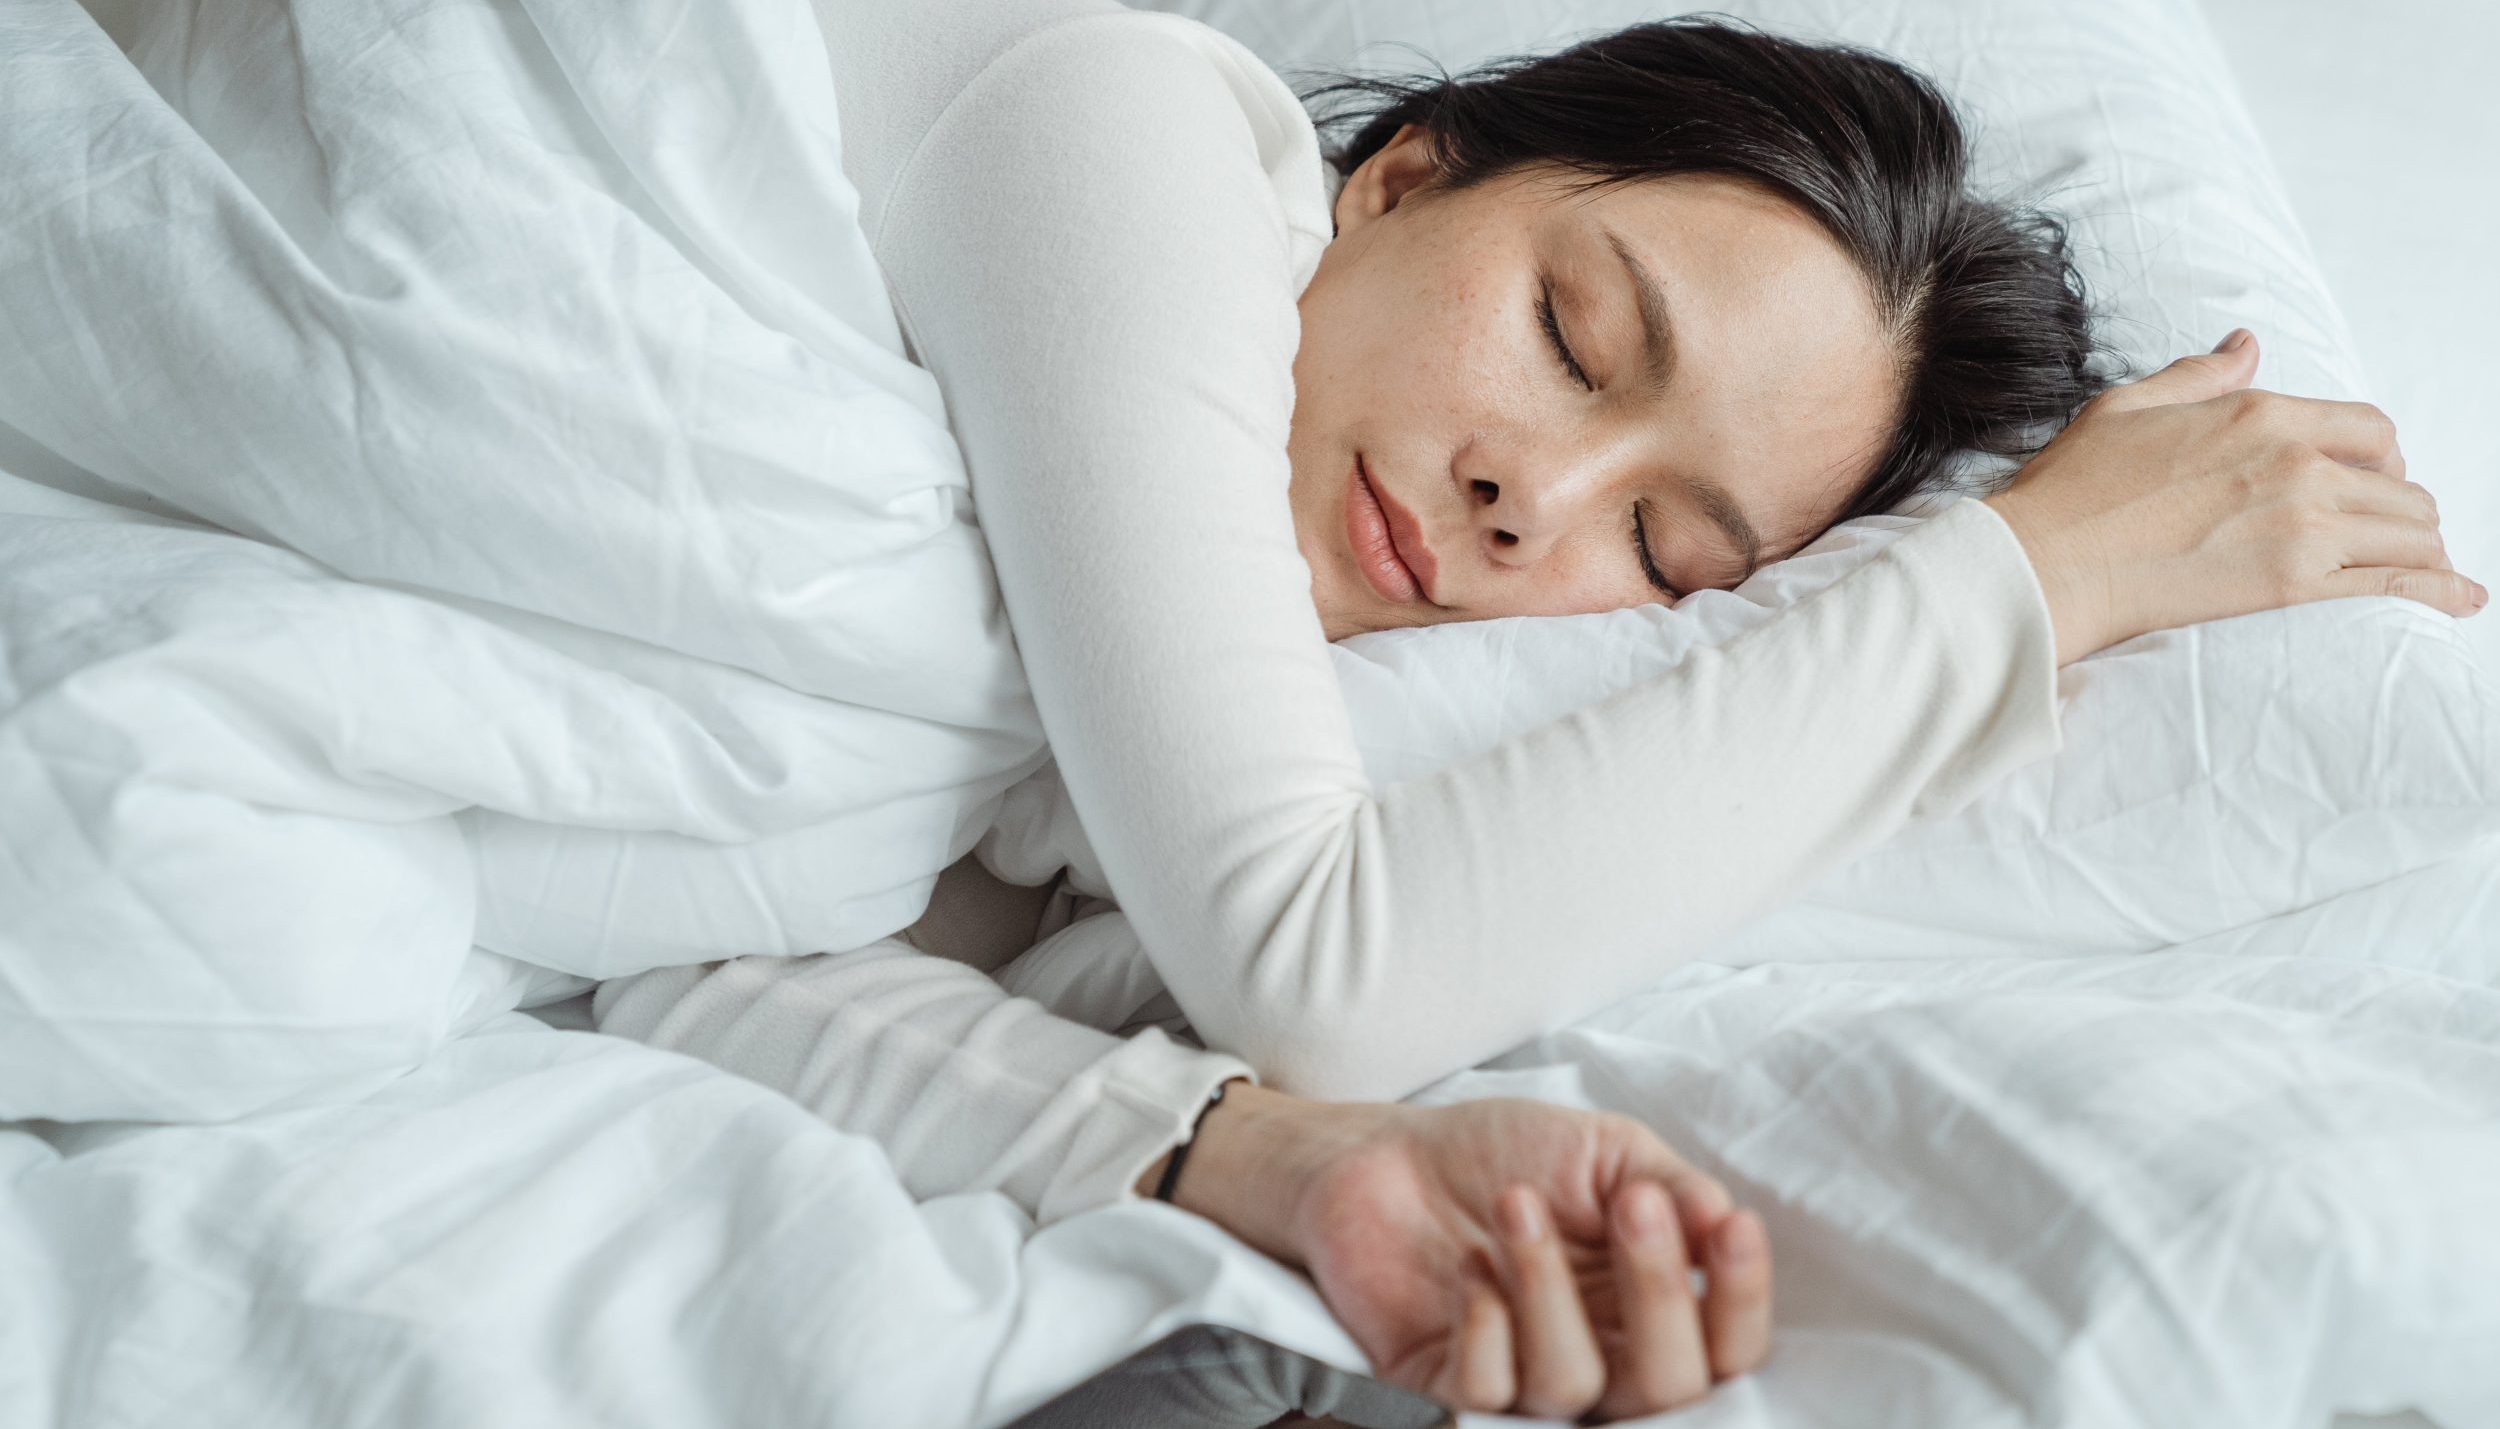 lechatrougesf.com, why do we sleep